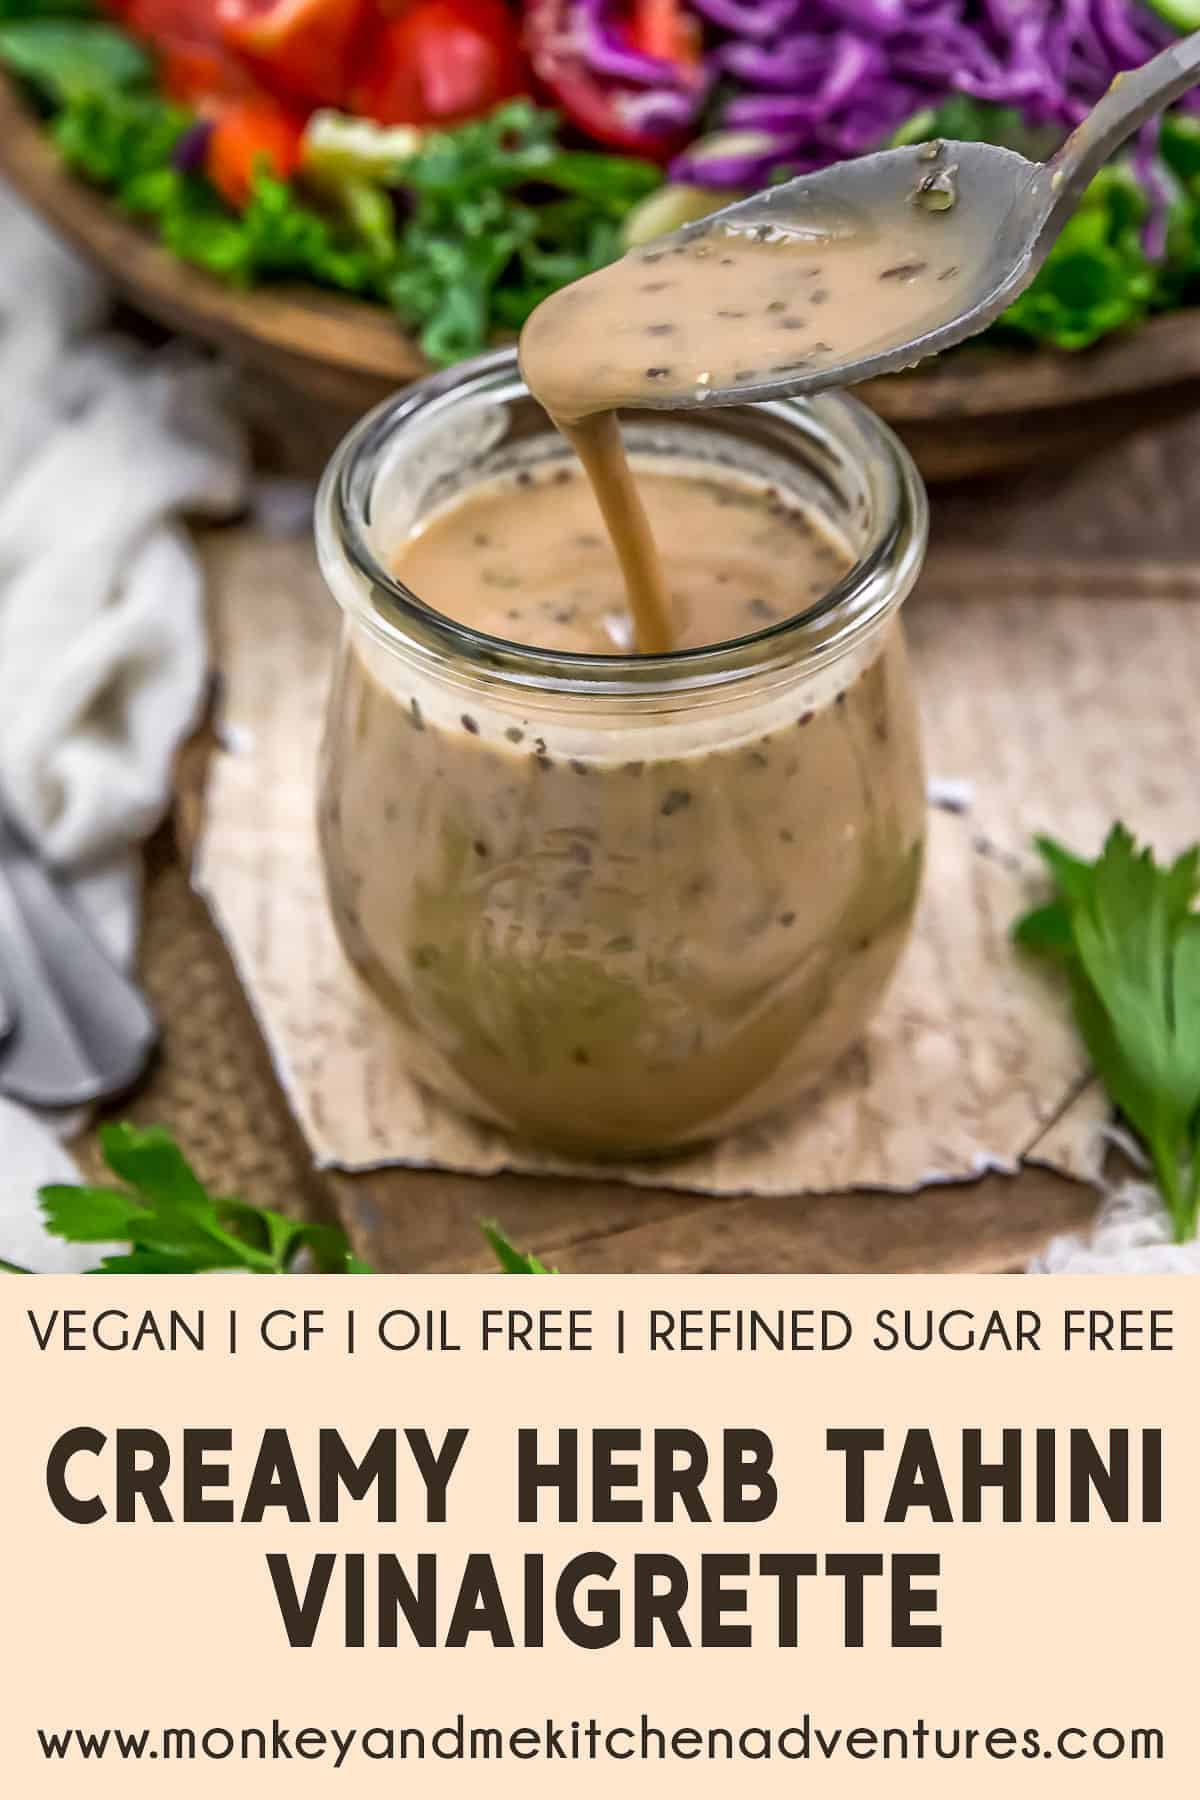 Creamy Herb Tahini Vinaigrette with text description